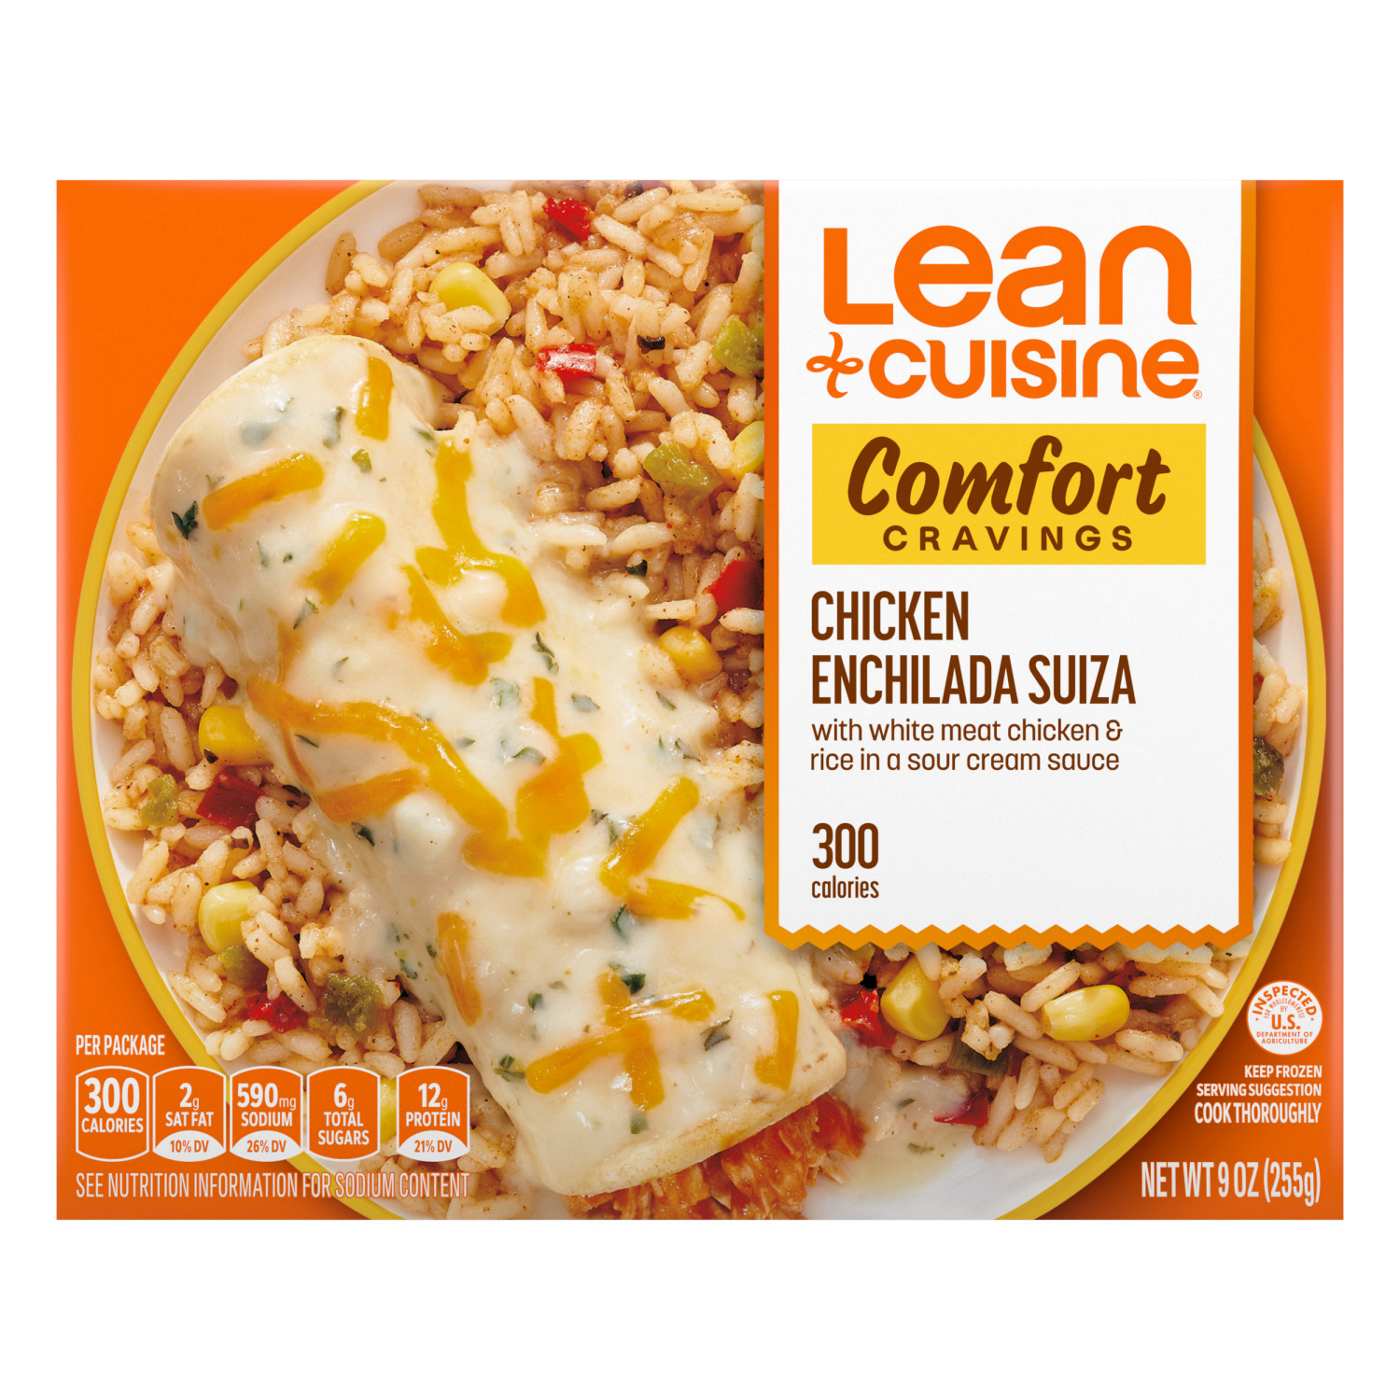 Lean Cuisine Comfort Cravings Chicken Enchilada Suiza Frozen Meal; image 1 of 7